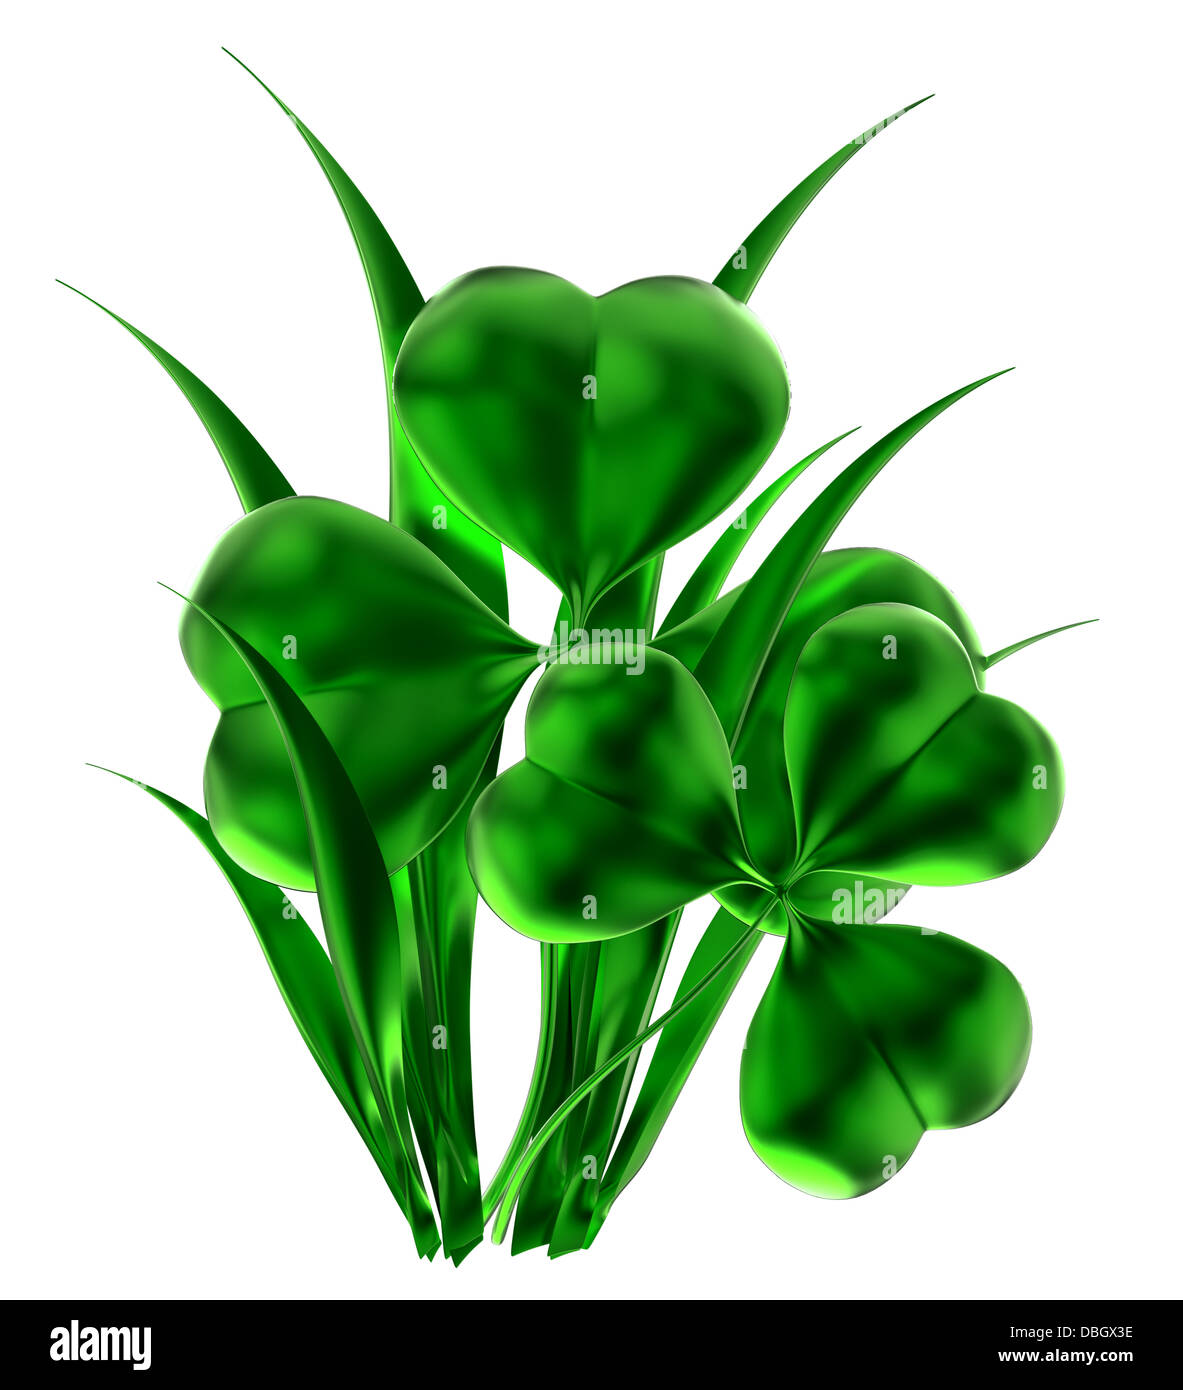 shamrock as symbol of St. Patrick's day Stock Photo